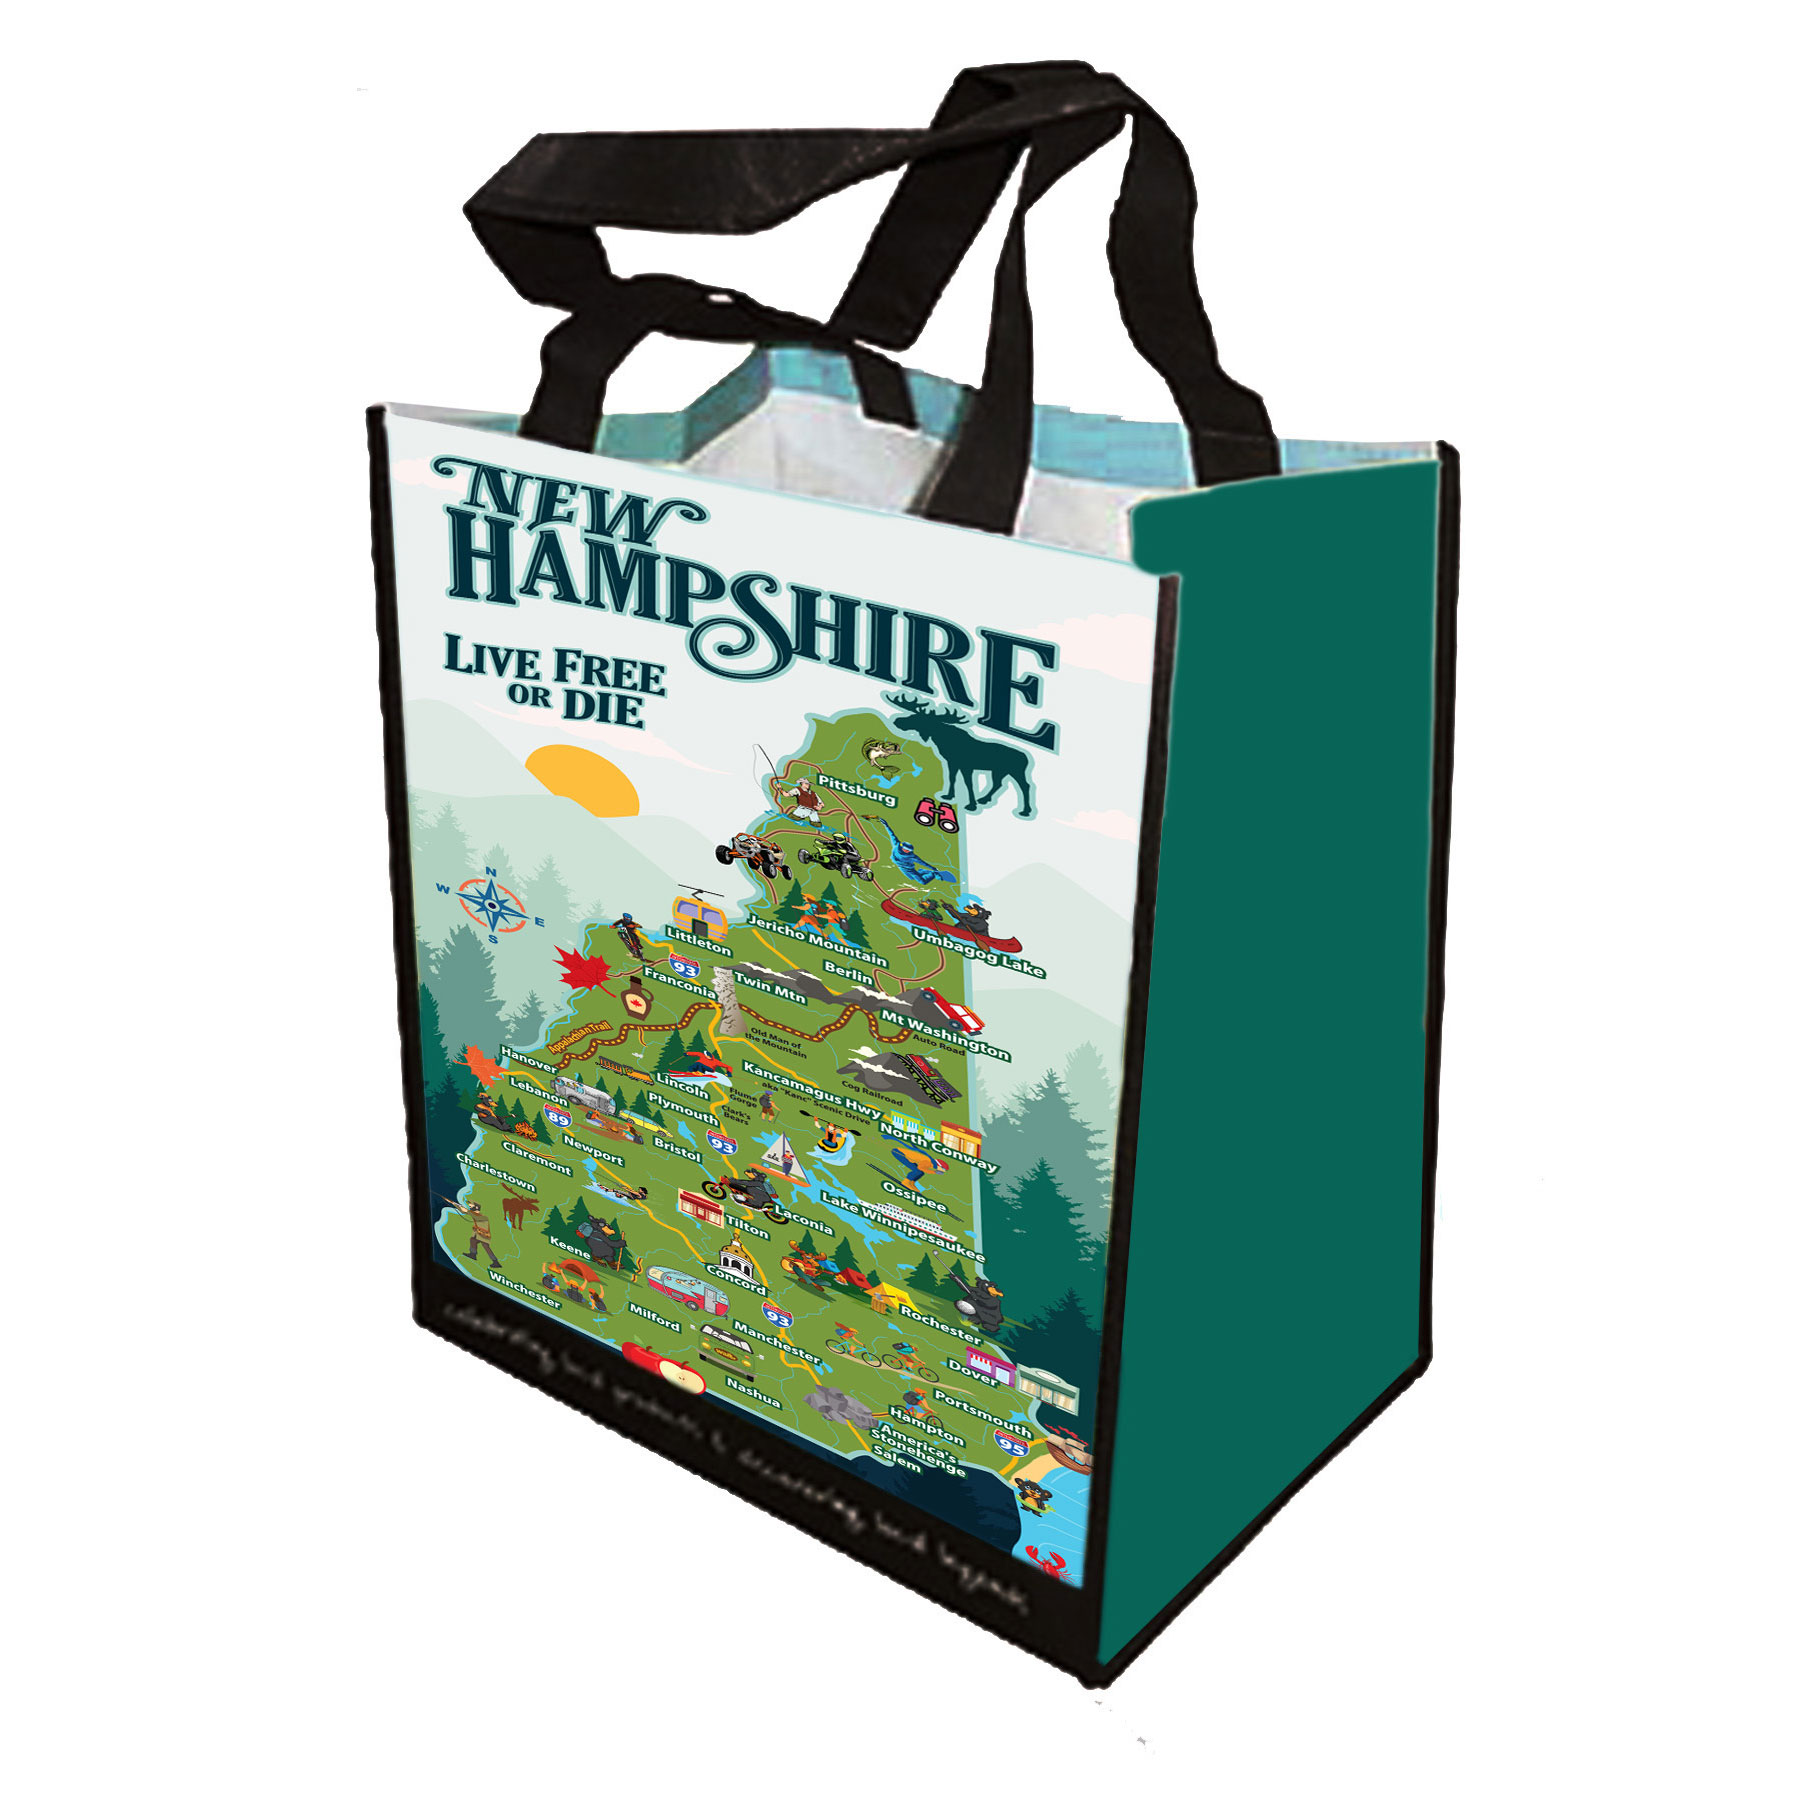 NEW HAMPSHIRE MAP SHOPPING BAG